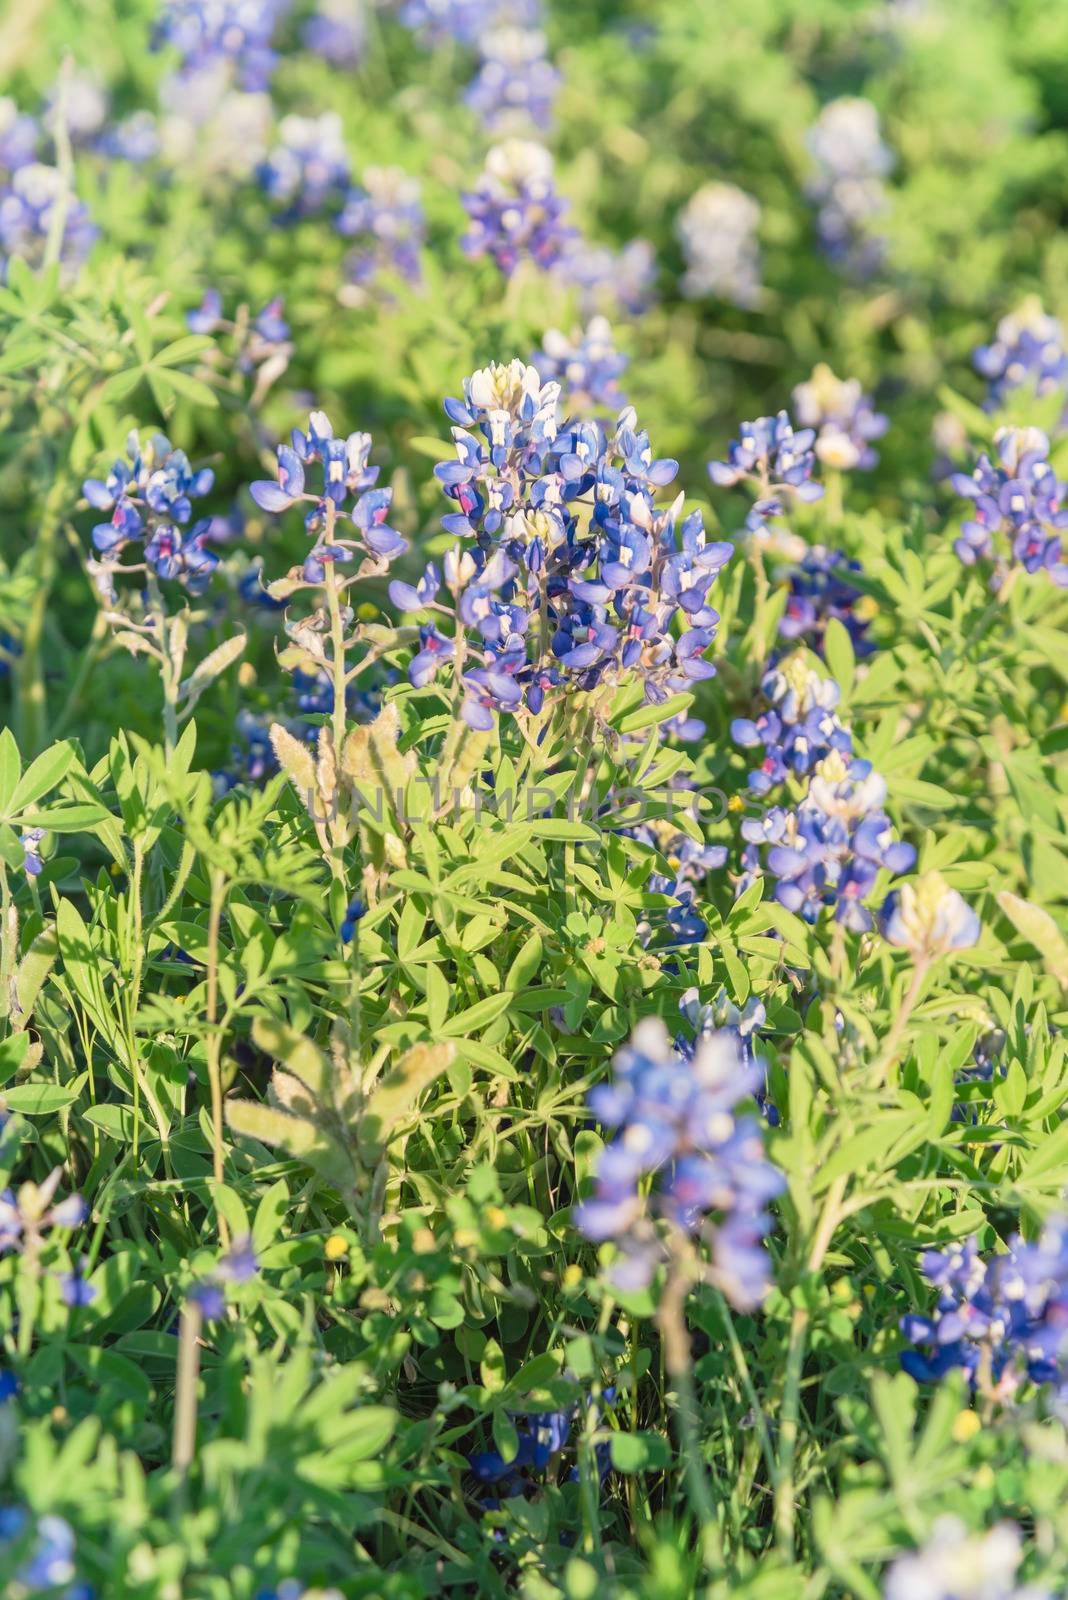 Blooming Bluebonnet wildflower at springtime near Dallas, Texas by trongnguyen